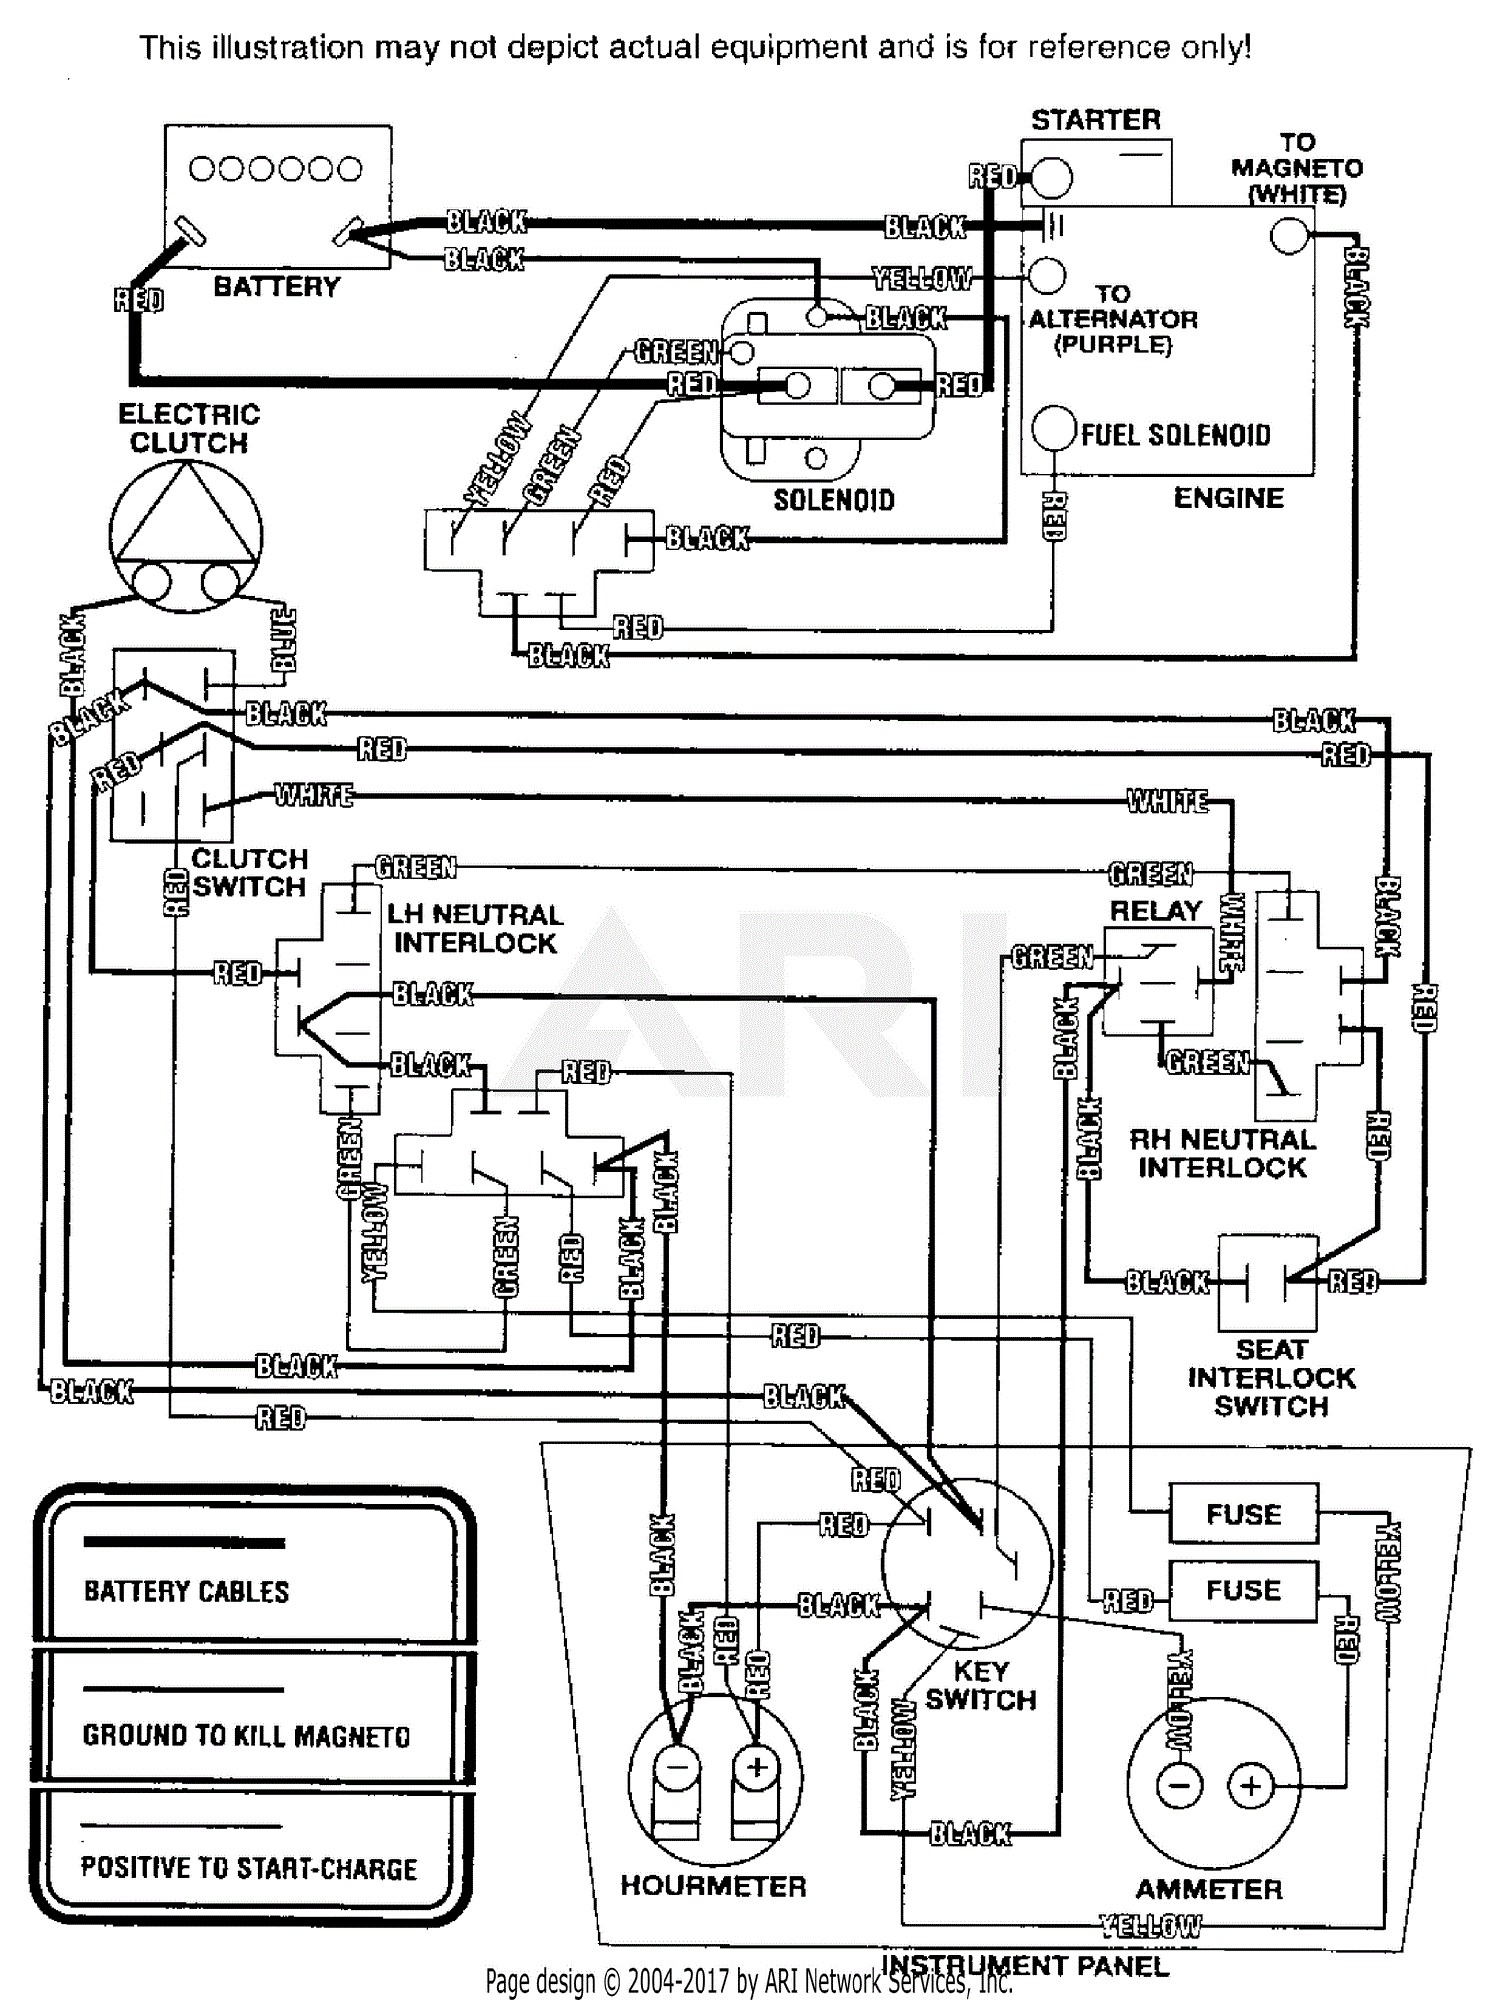 19.5 Horse Briggs Wiring Diagram Diagram] 10 Hp Briggs and Stratton Carb Diagram Wiring Full Of 19.5 Horse Briggs Wiring Diagram